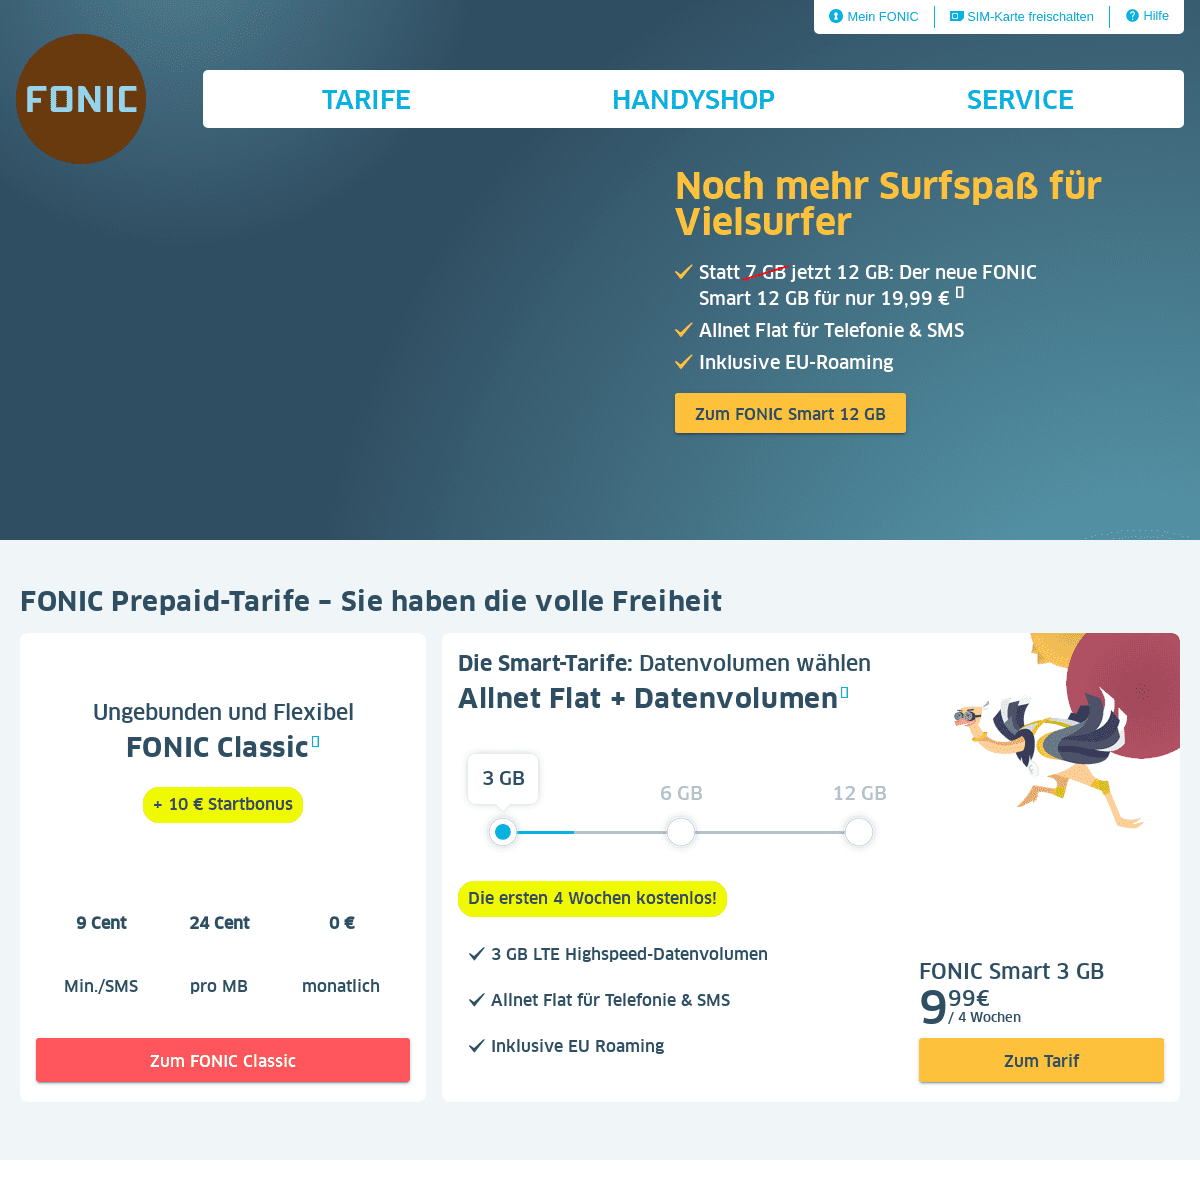 A complete backup of https://fonic.de